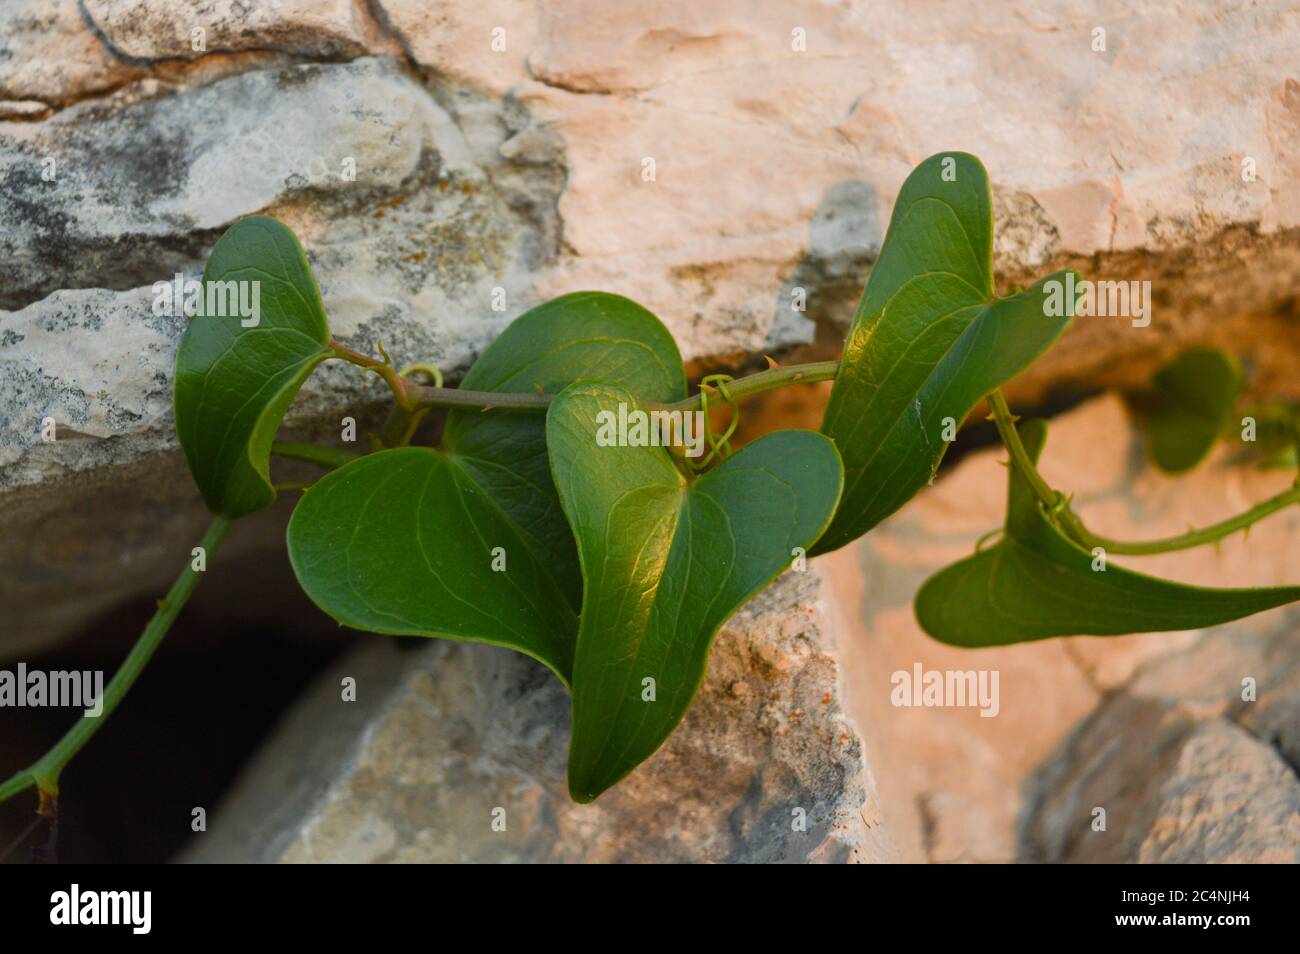 Heart-shaped leaves, common smilax (lat. Smilax aspera) growing inside the sharp rocks, Mediterranean plant, symbol of love Stock Photo